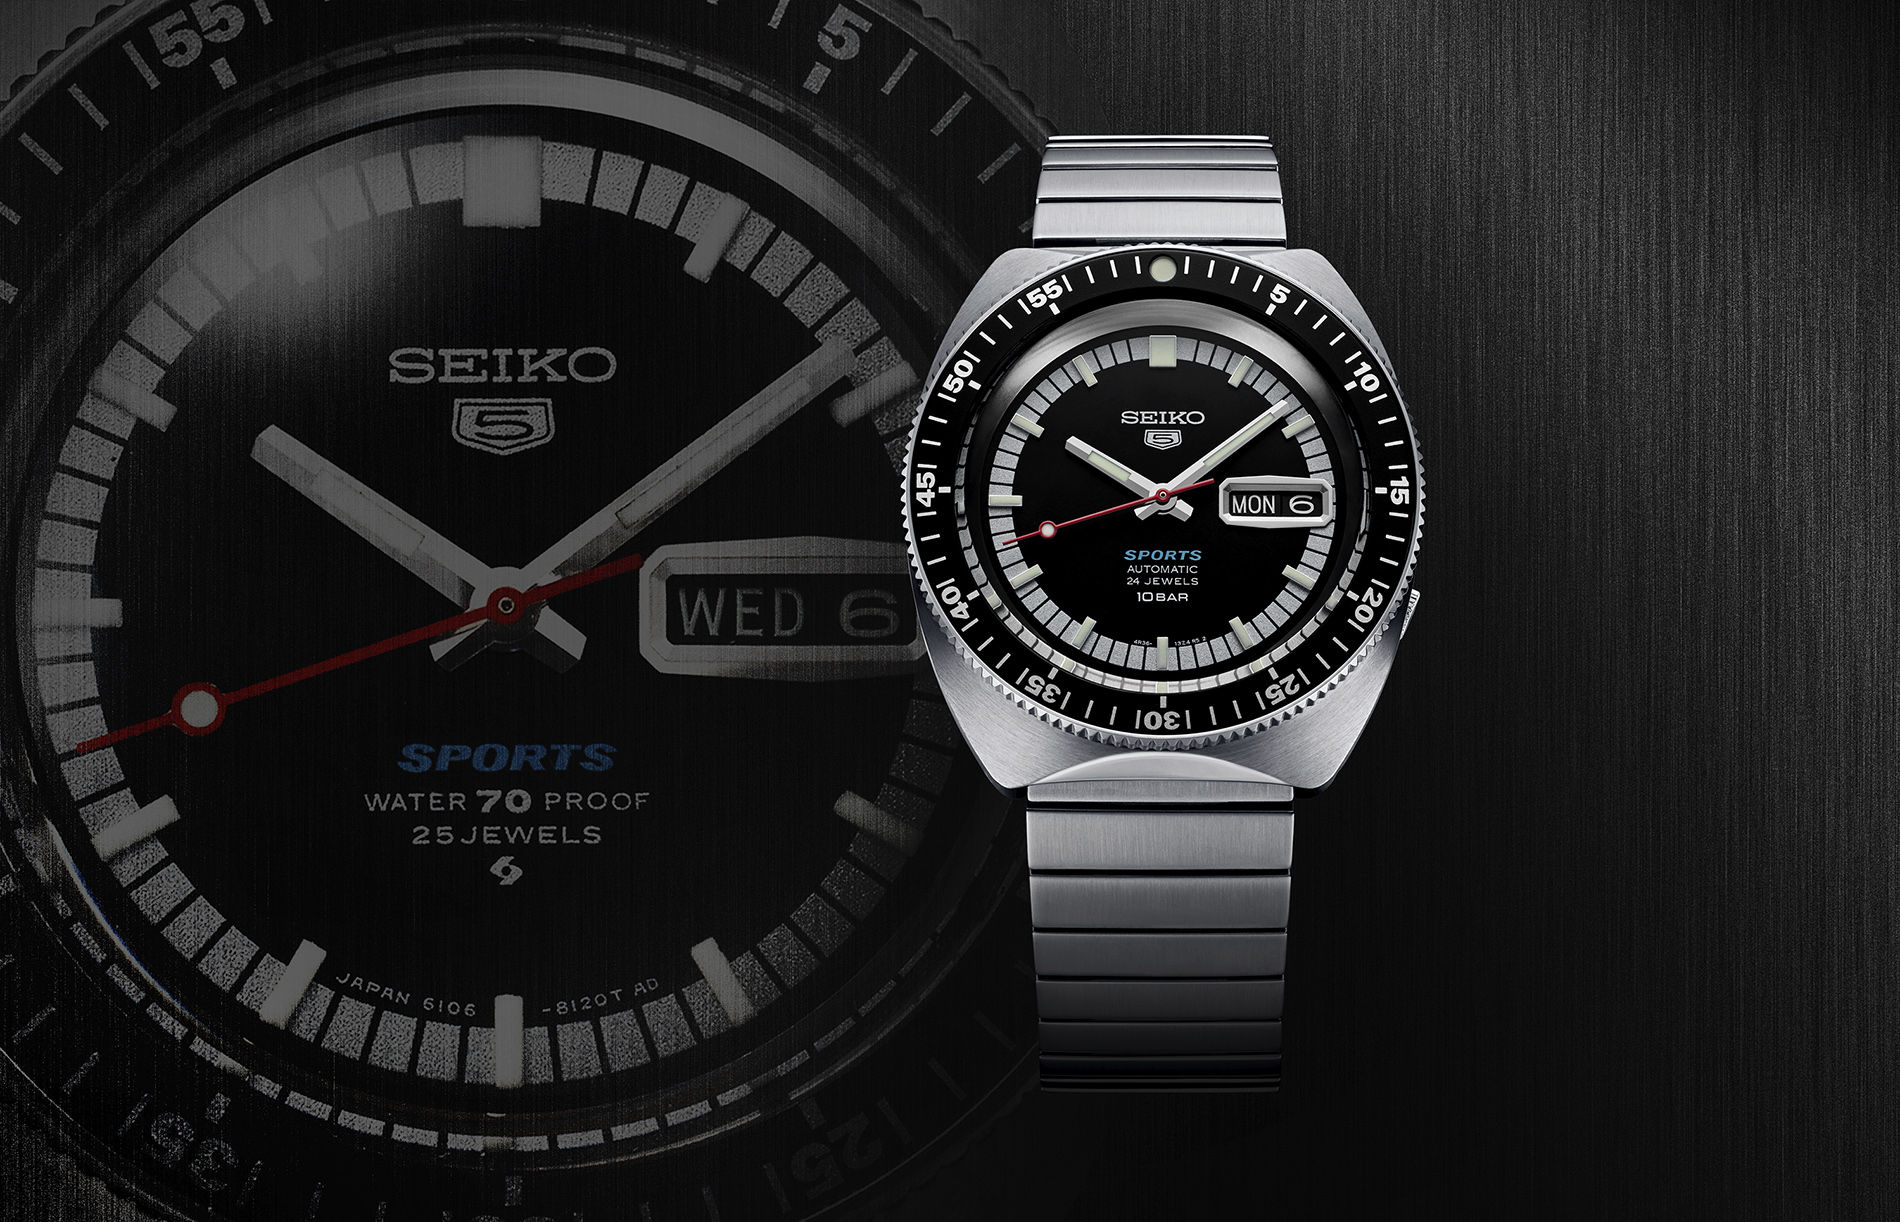 5 Sports | Seiko Watch Corporation